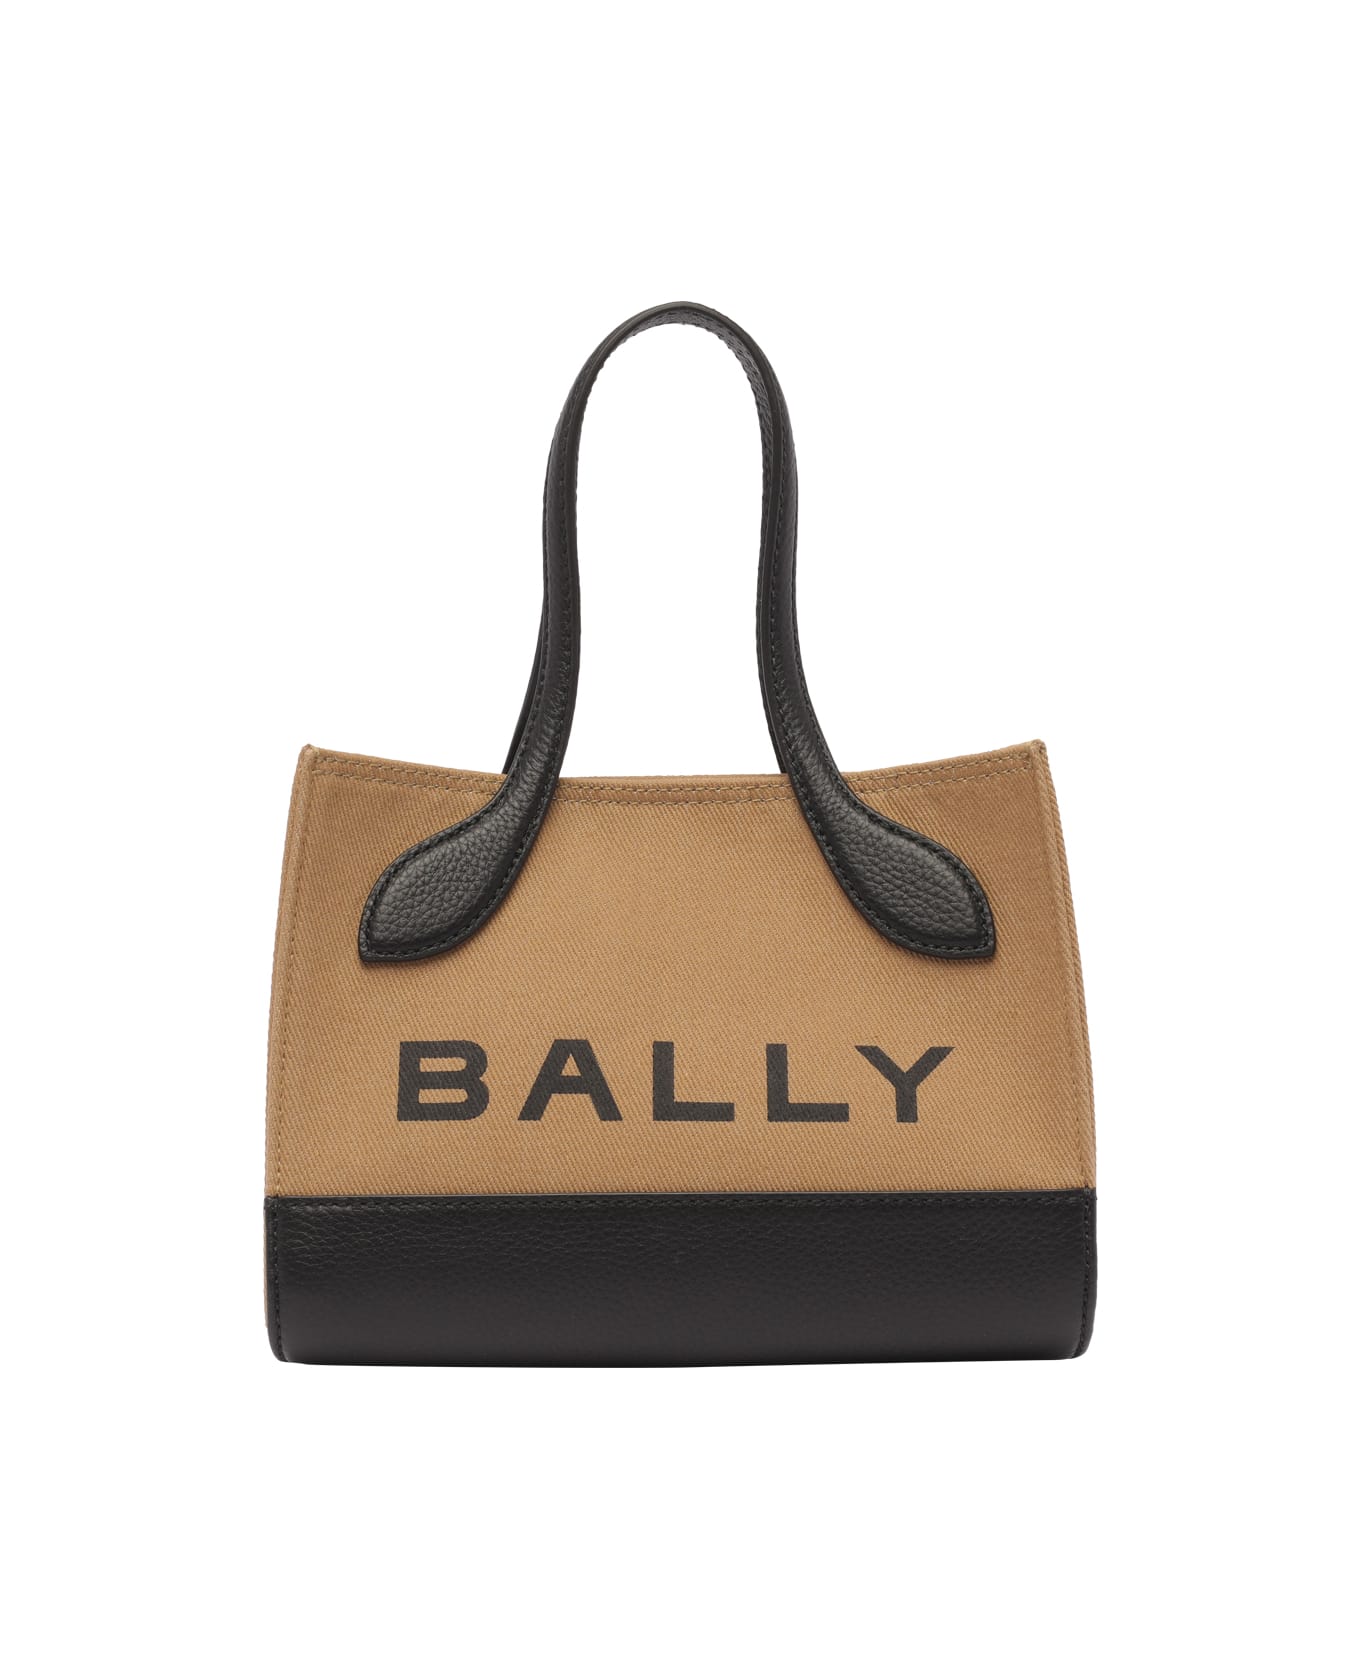 Bally Logo Tote Bag - Sand/black+oro